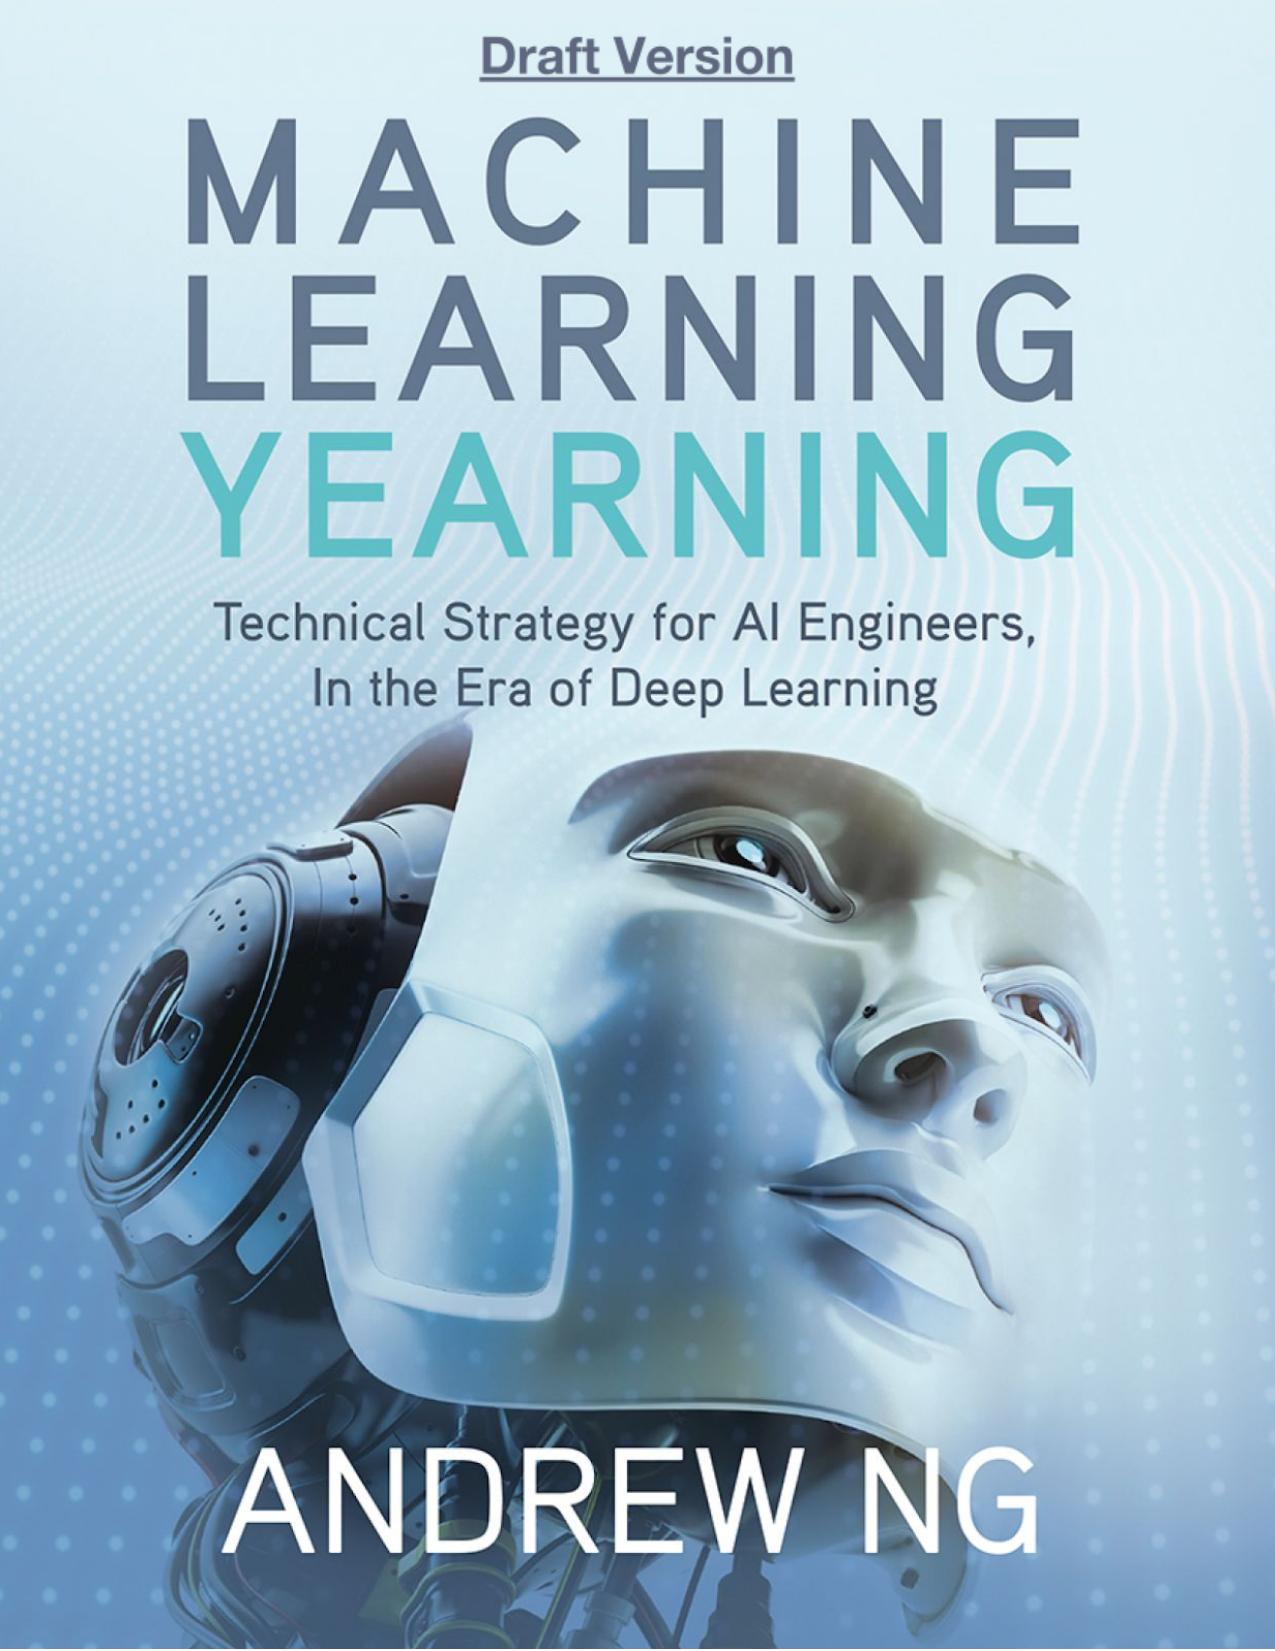 Machine Learning Yearning (Draft Version)